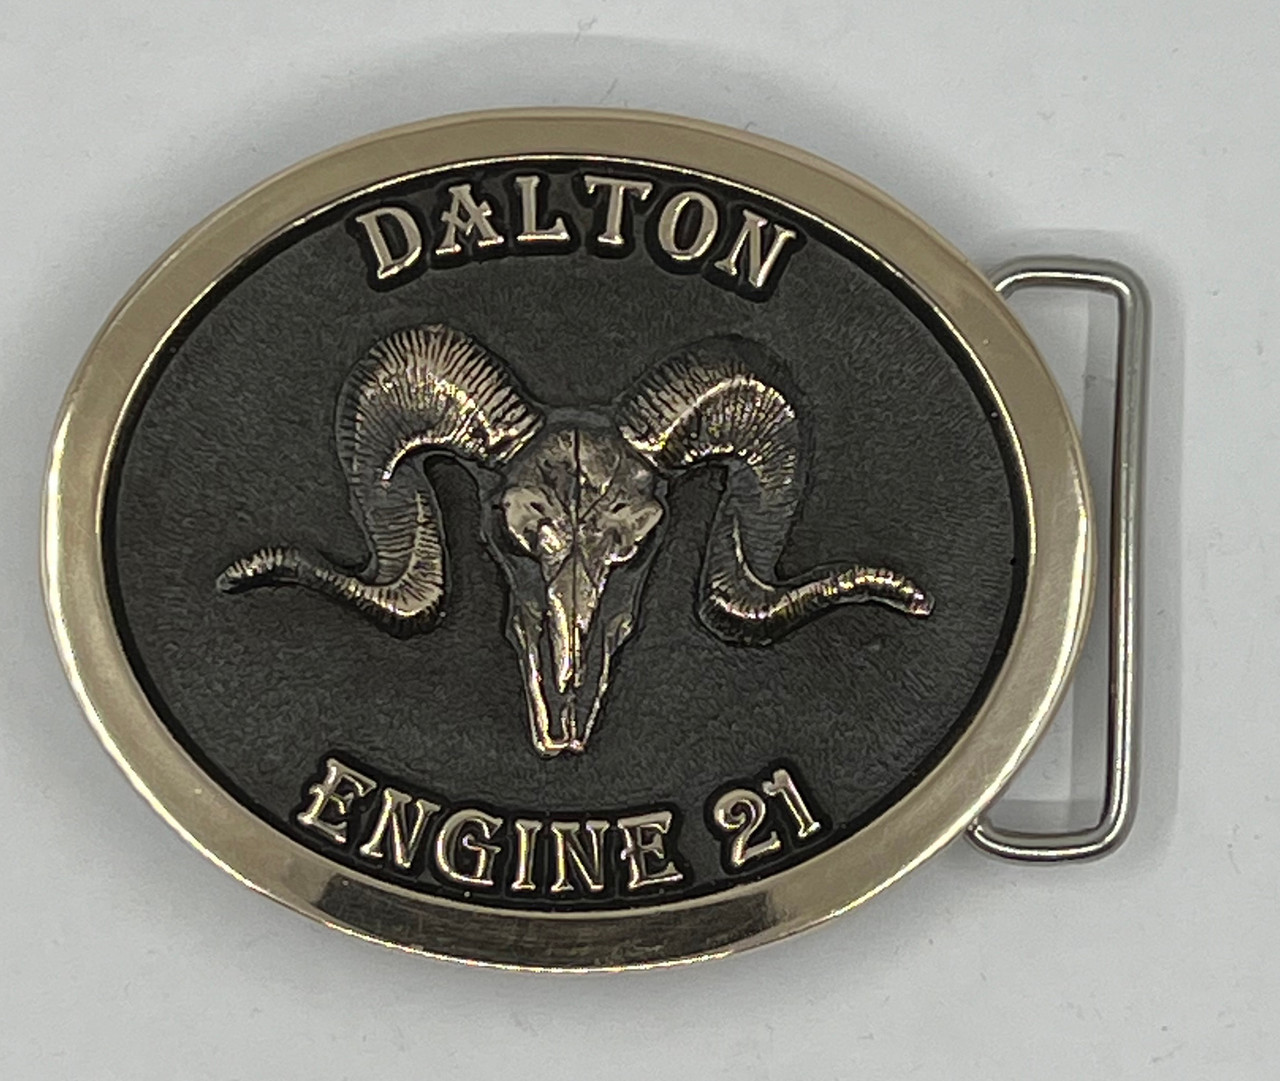 Dalton Engine 21 Buckle (RESTRICTED)